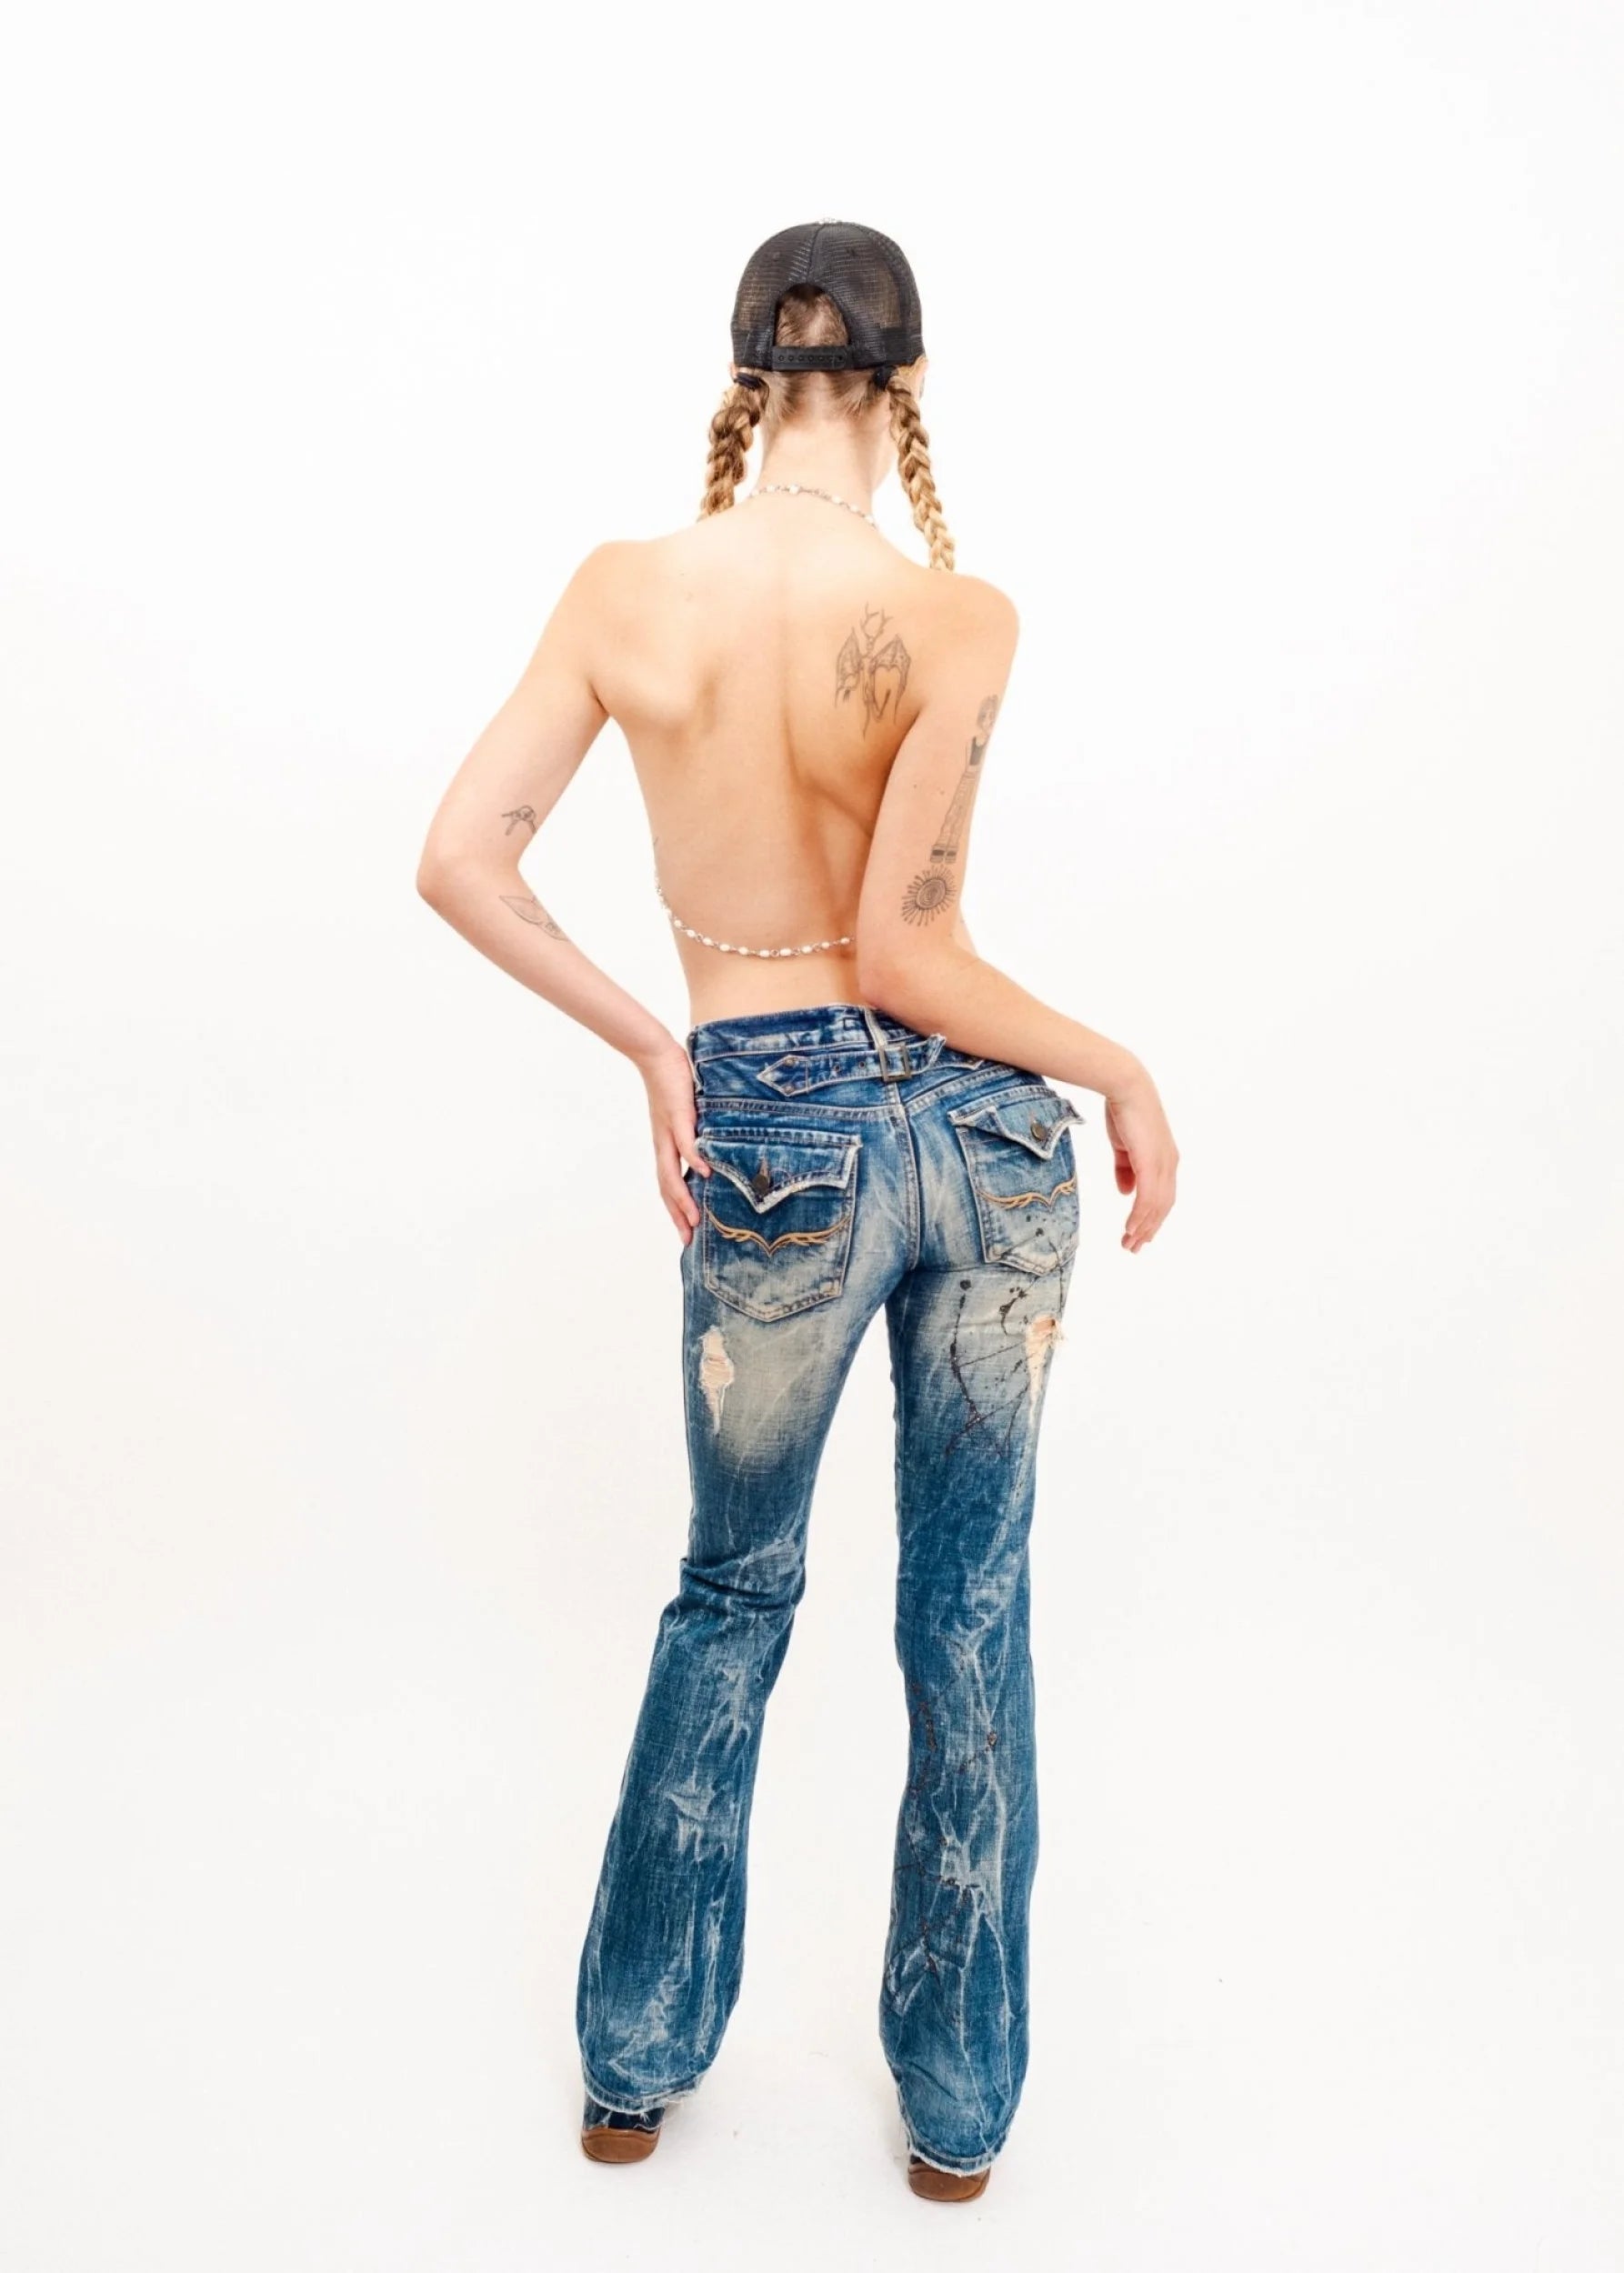 Fuga Engineered jeans